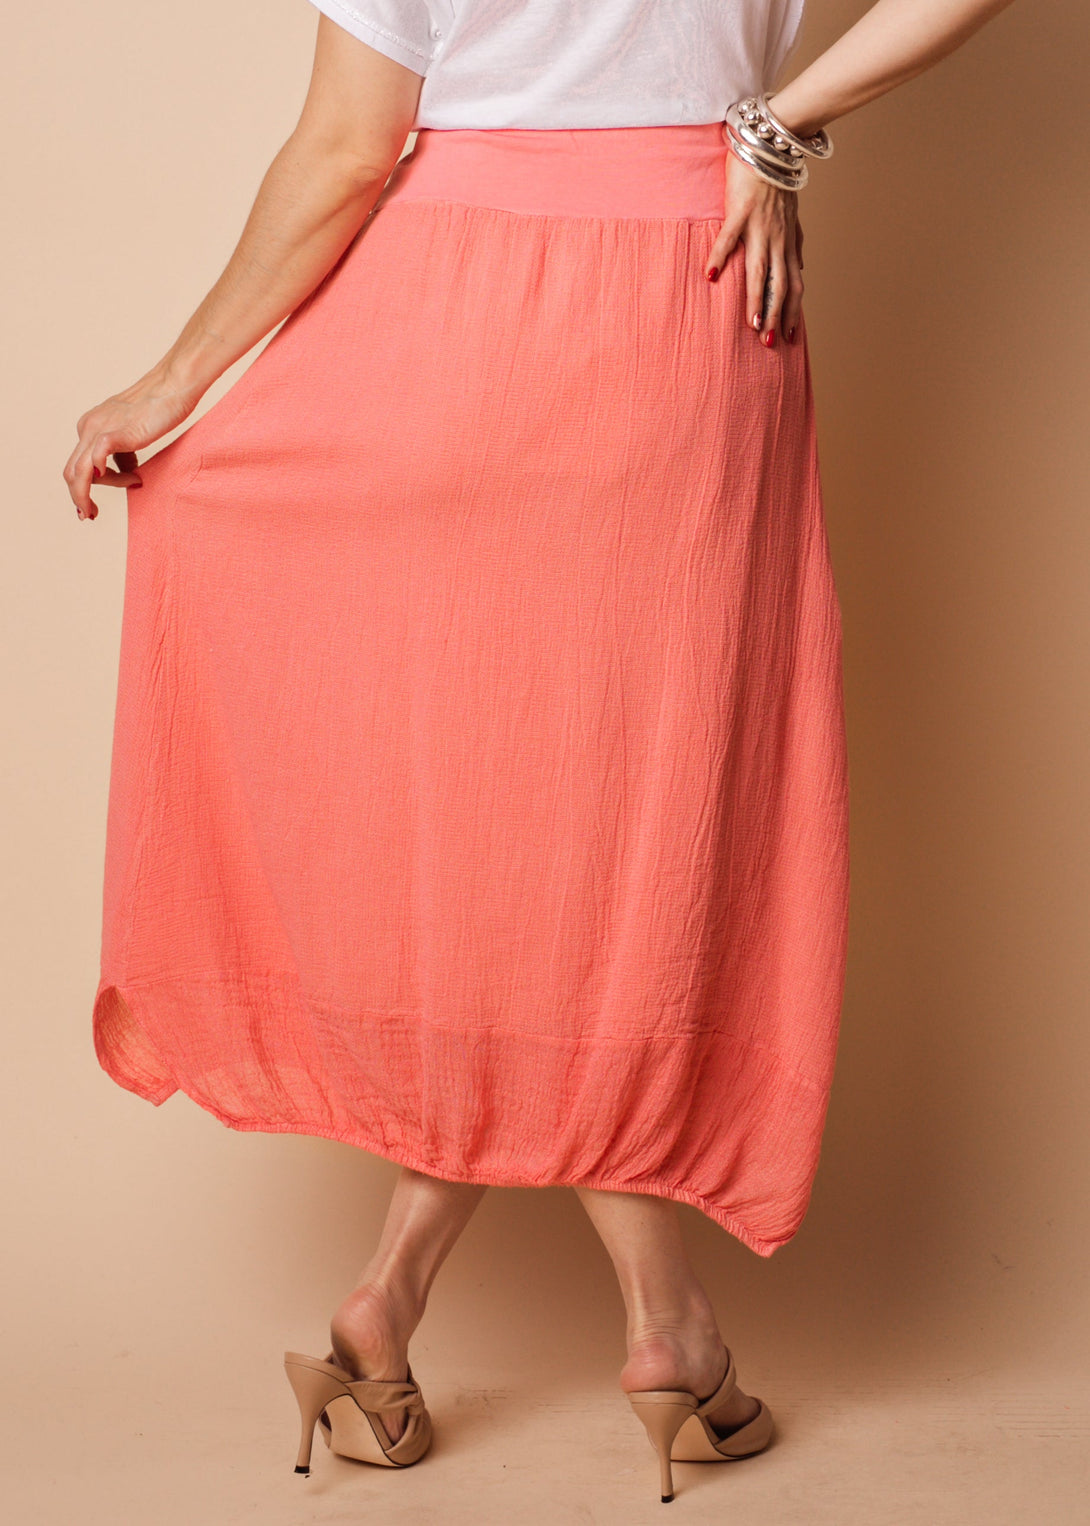 Leela Linen Skirt in Coral Crush - Imagine Fashion